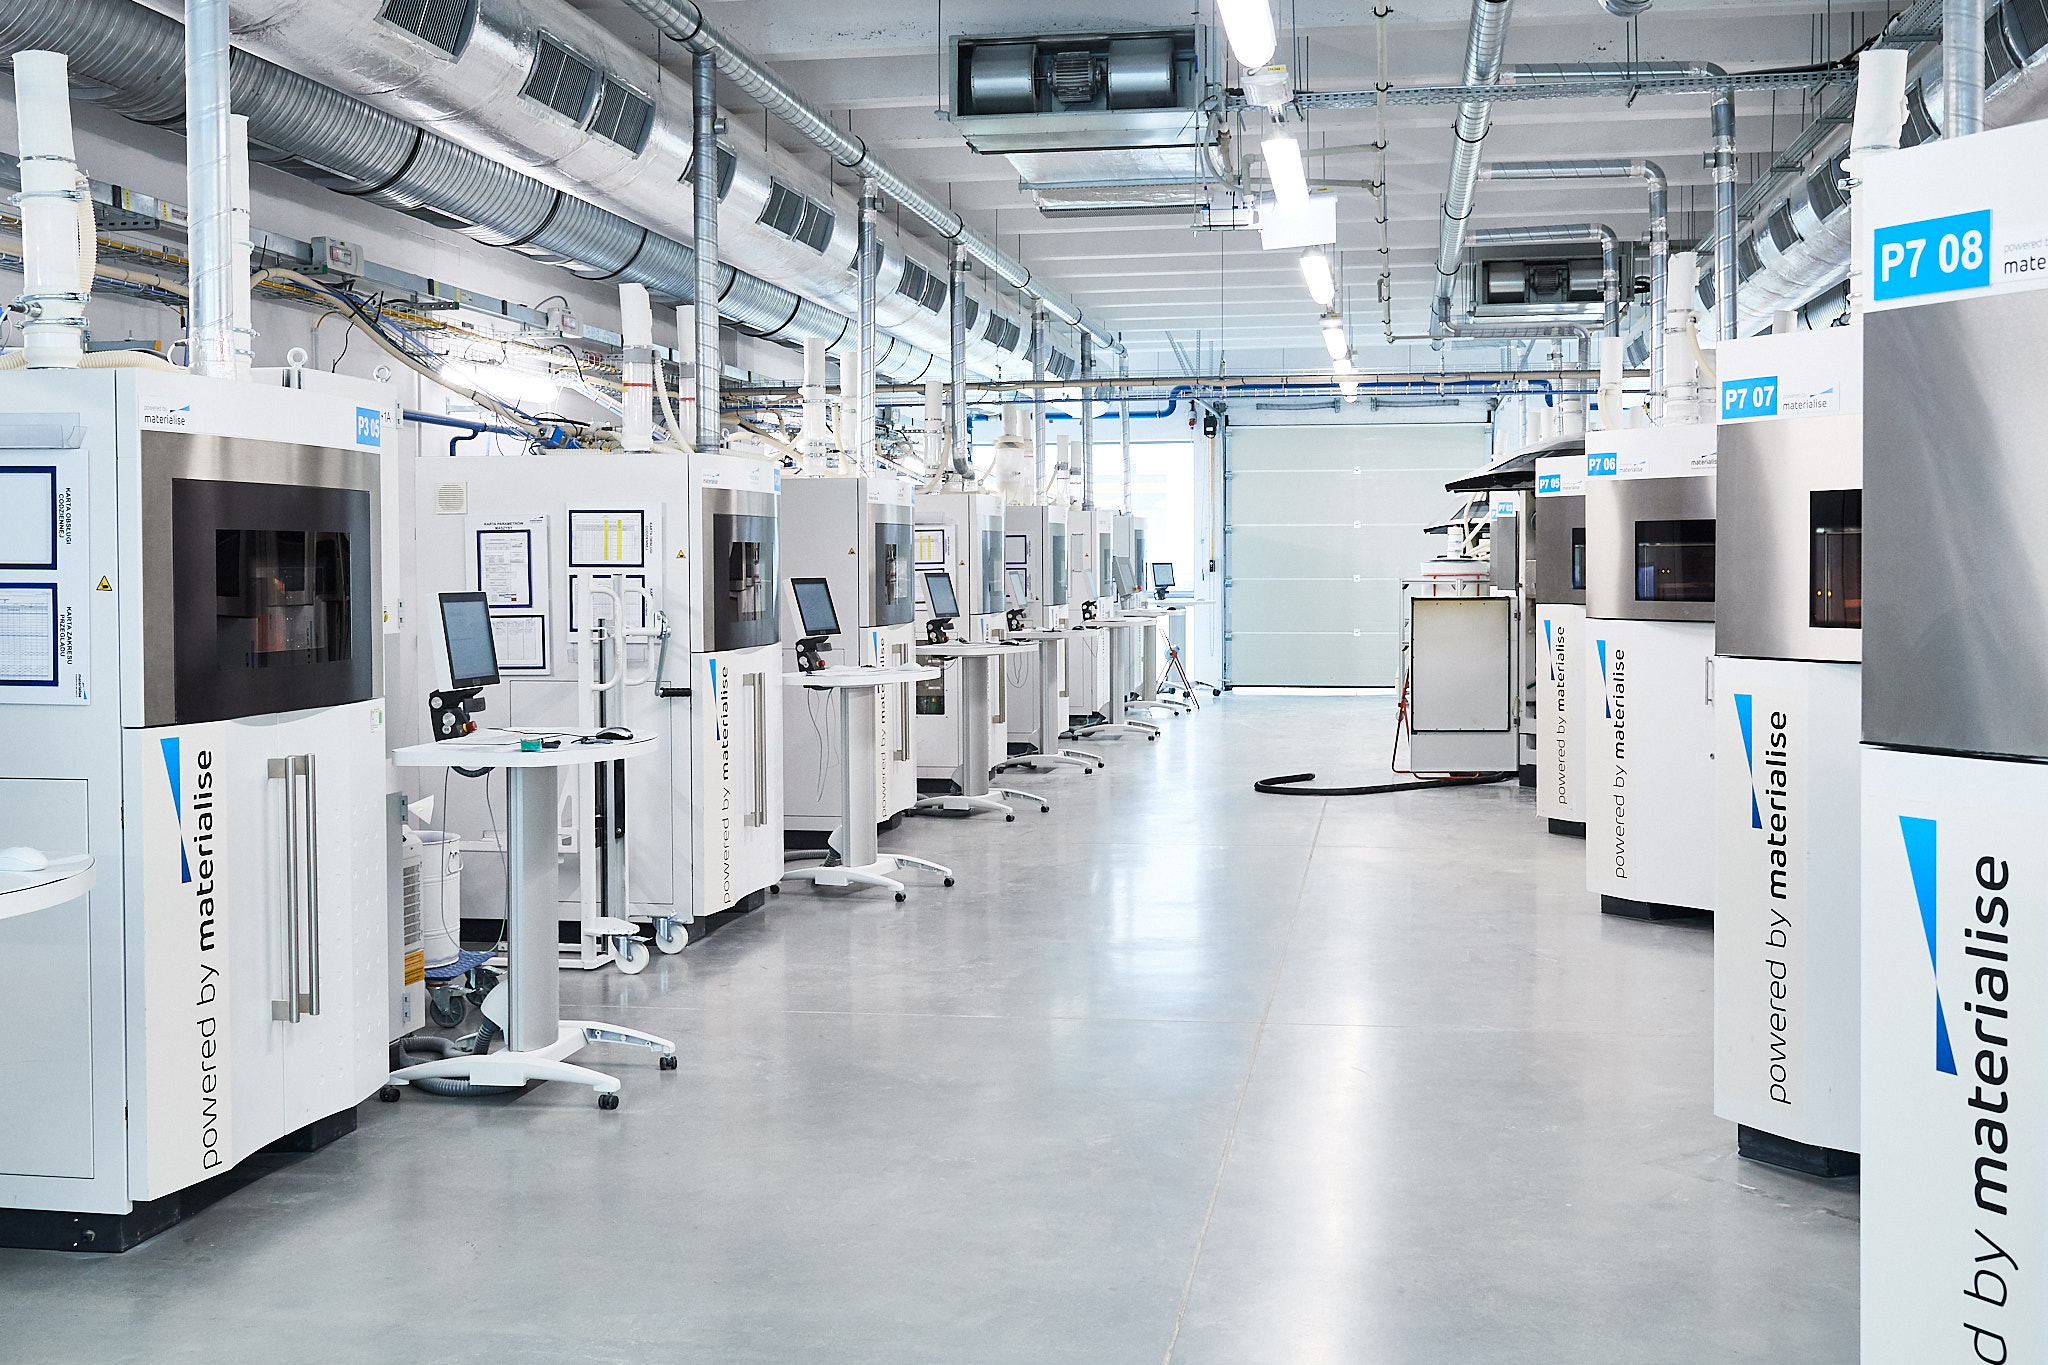 Materialise 3D printer facility in Leuven, Belgium. Photo via Materialise